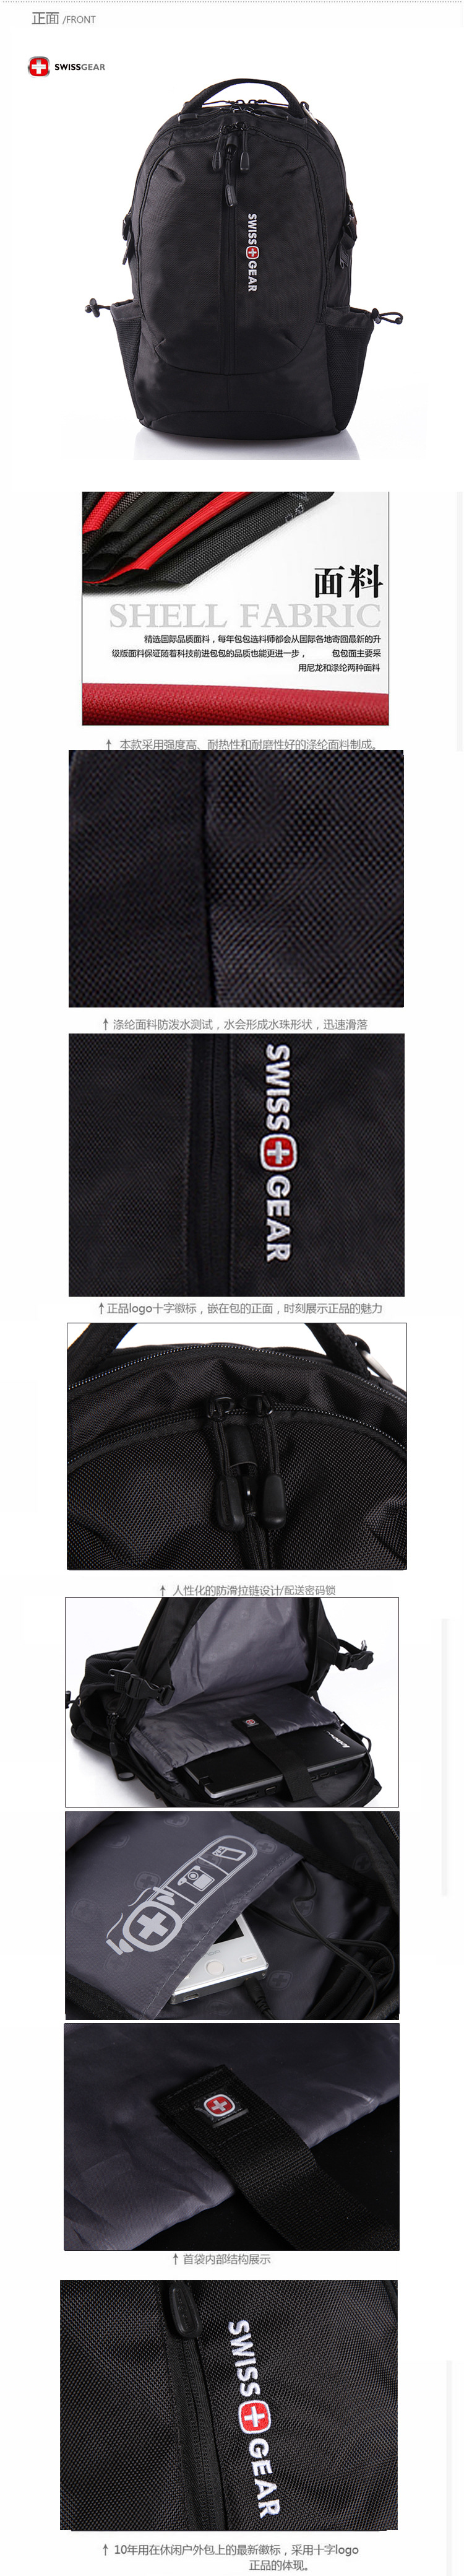 SWISSGEAR瑞士军刀包功能电脑包 双肩包 旅行背包